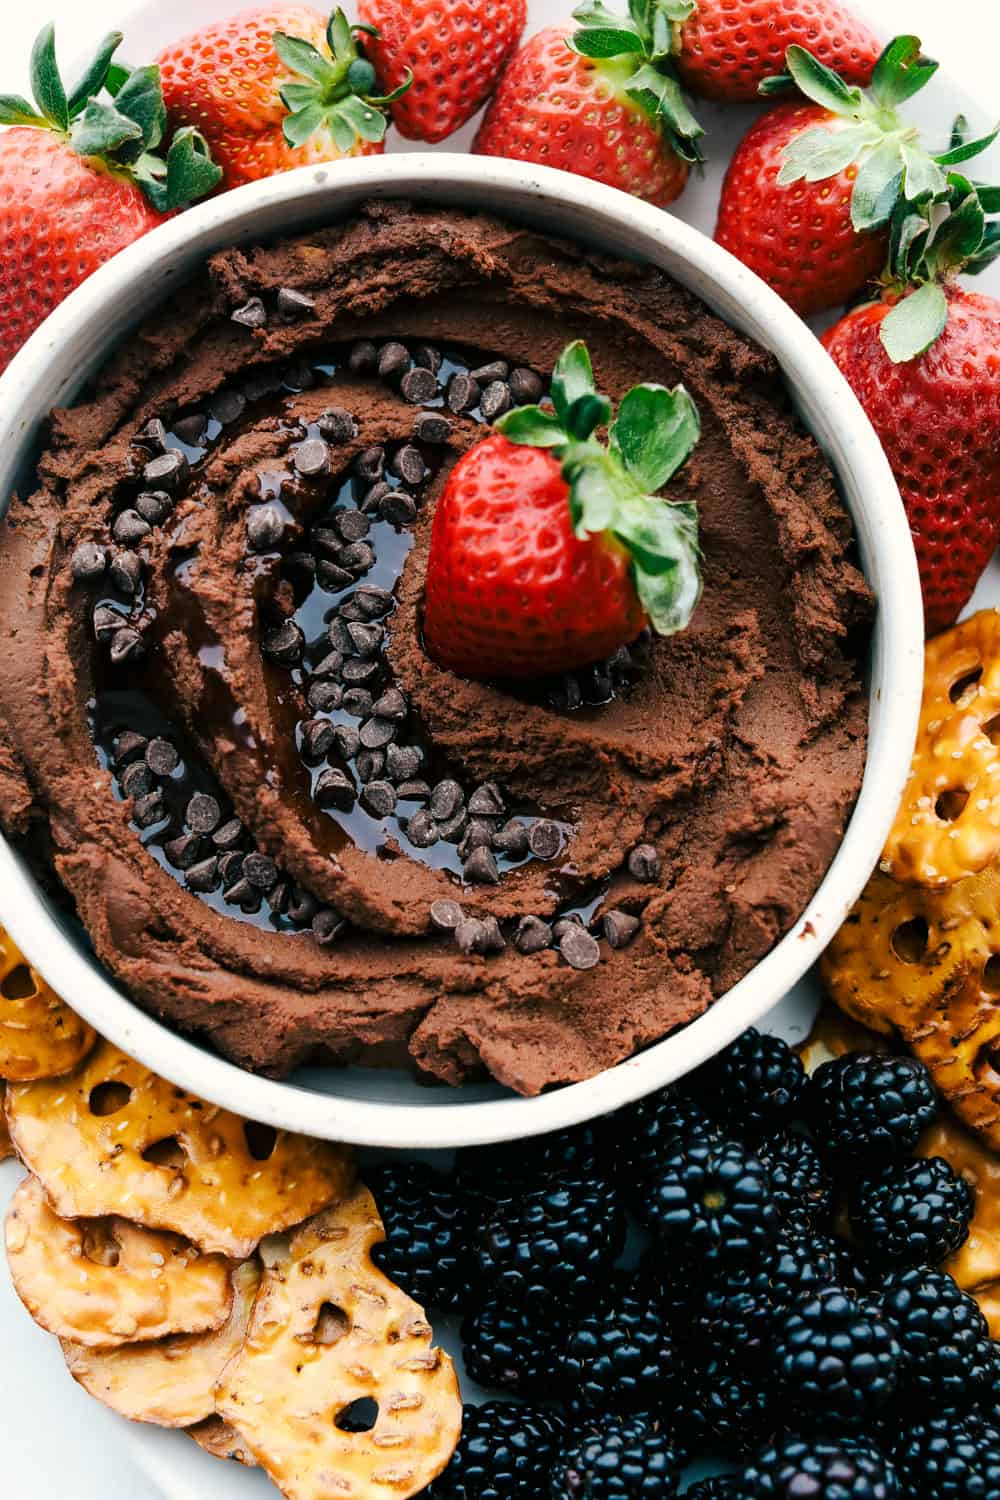 Chocolate Hummus with strawberries, pretzels and blackberries. 